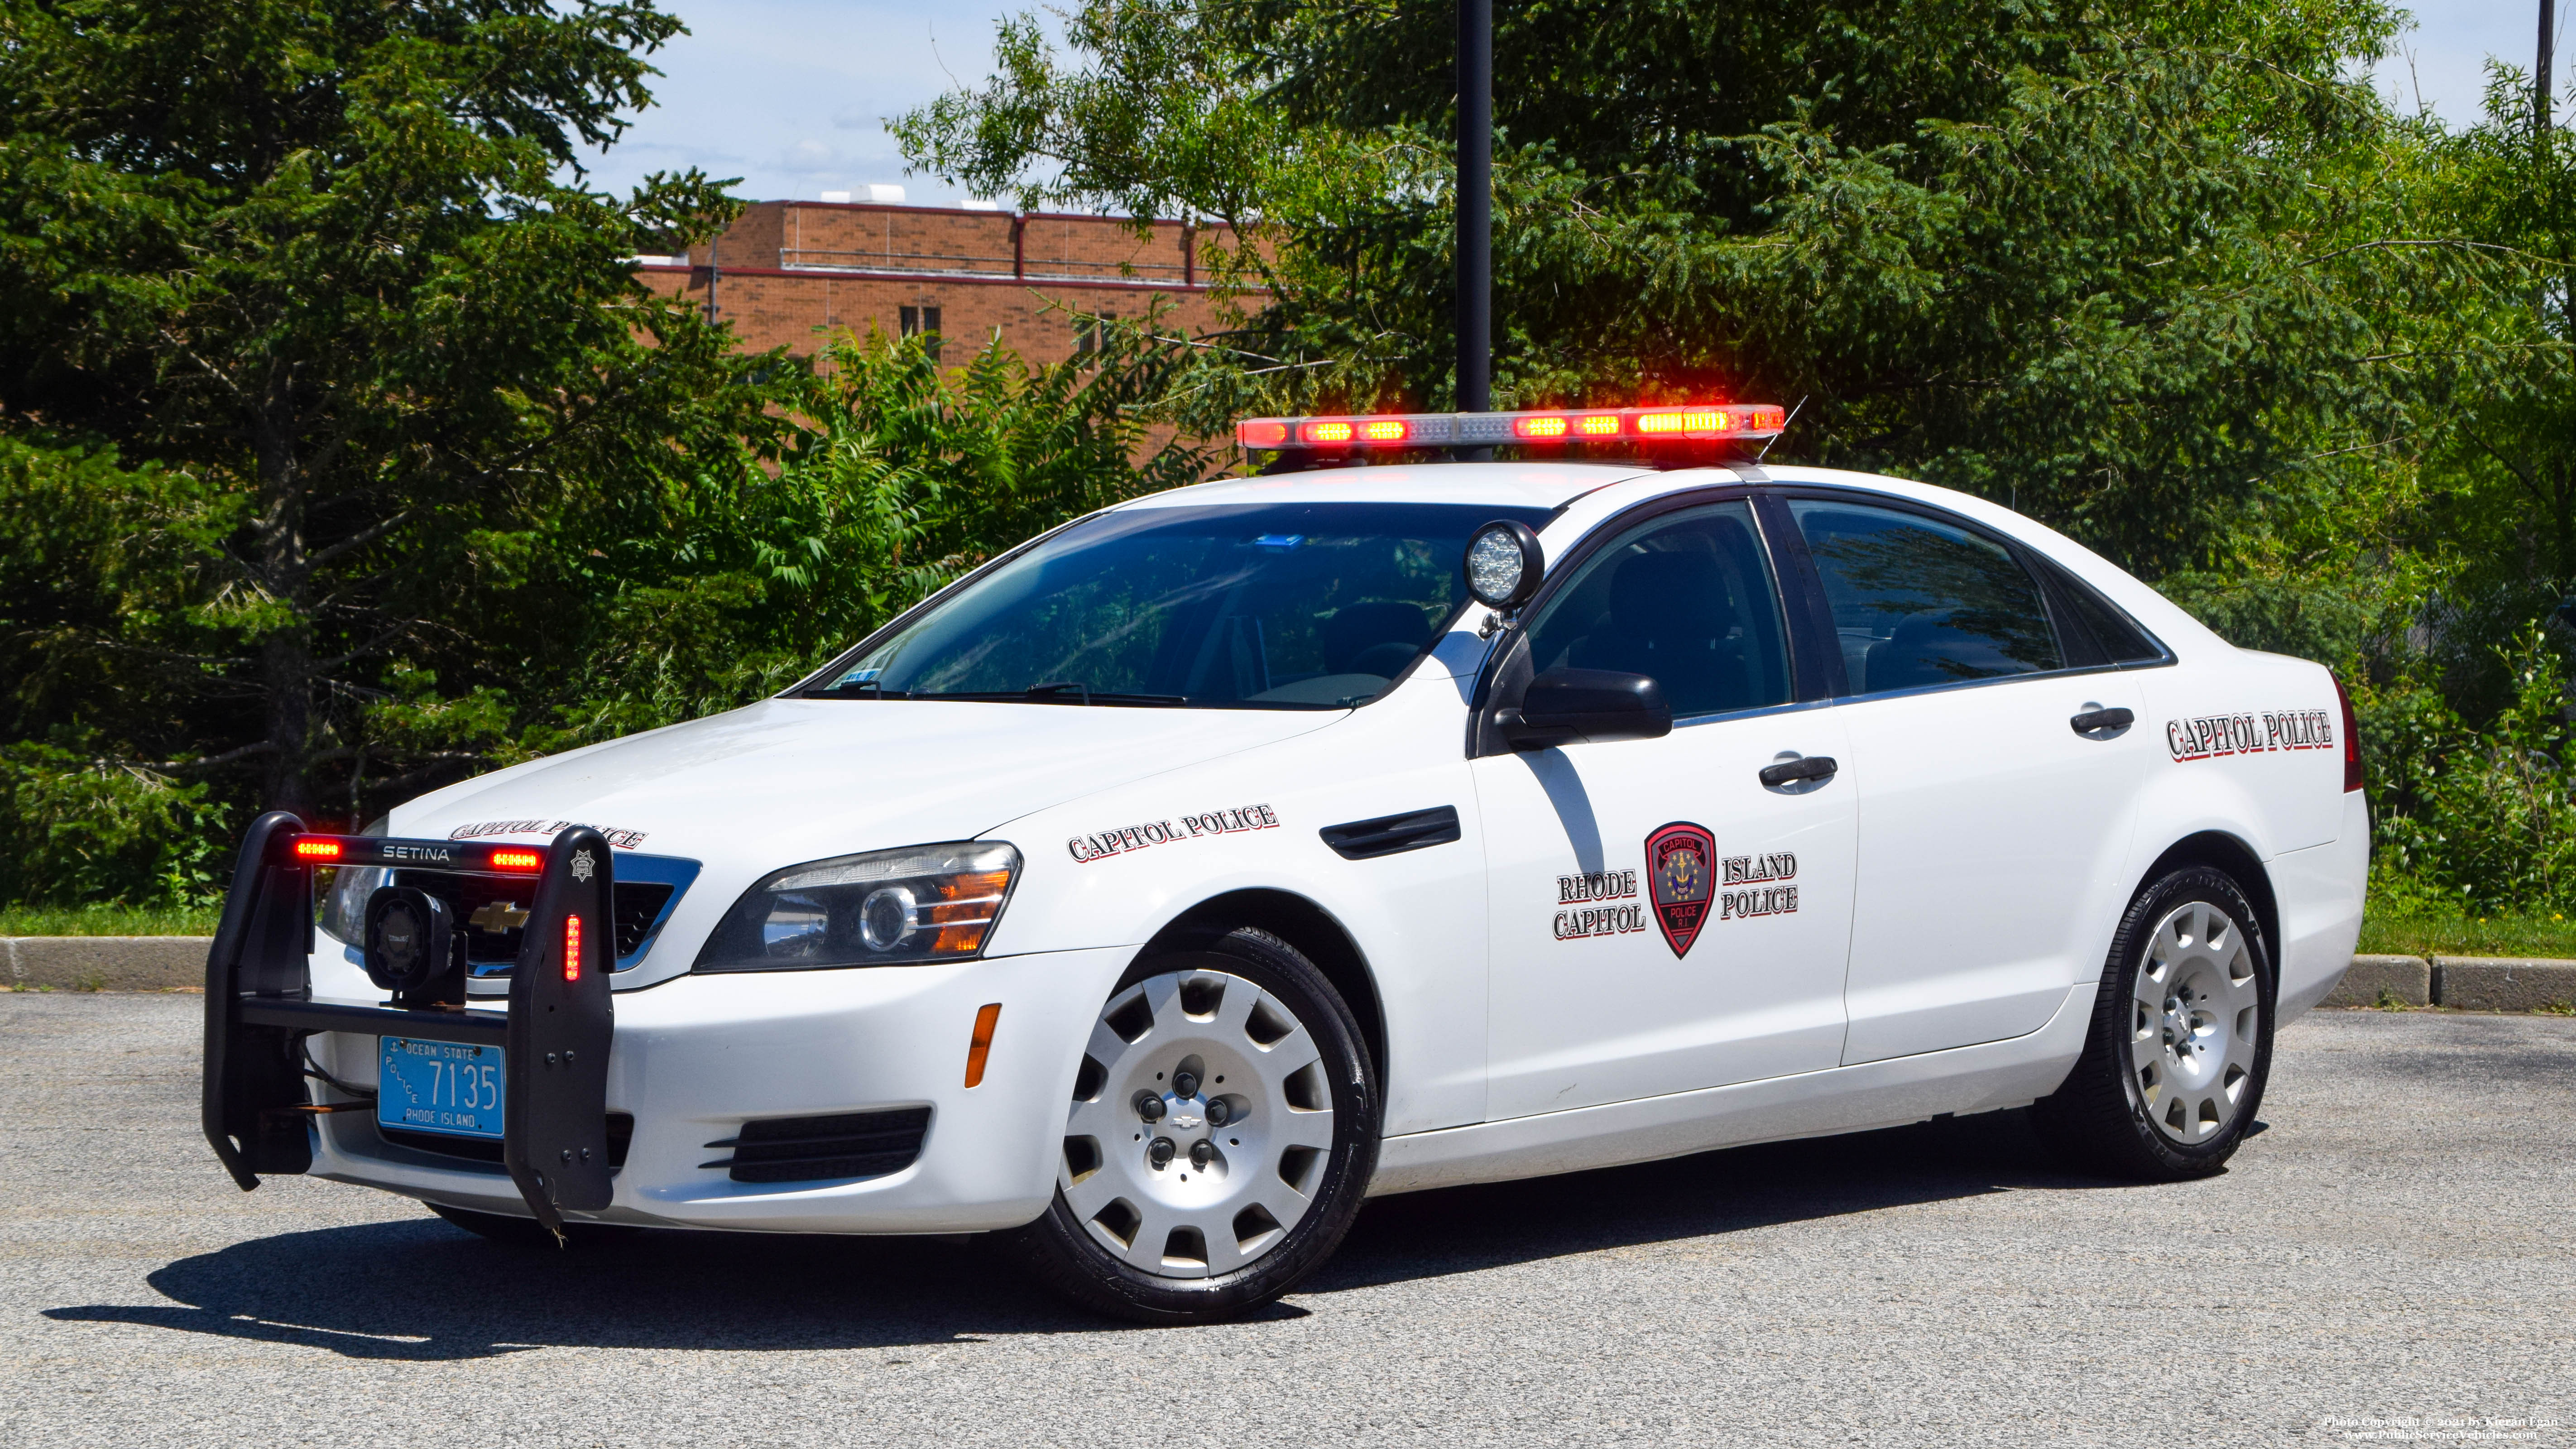 A photo  of Rhode Island Capitol Police
            Cruiser 7135, a 2014 Chevrolet Caprice             taken by Kieran Egan